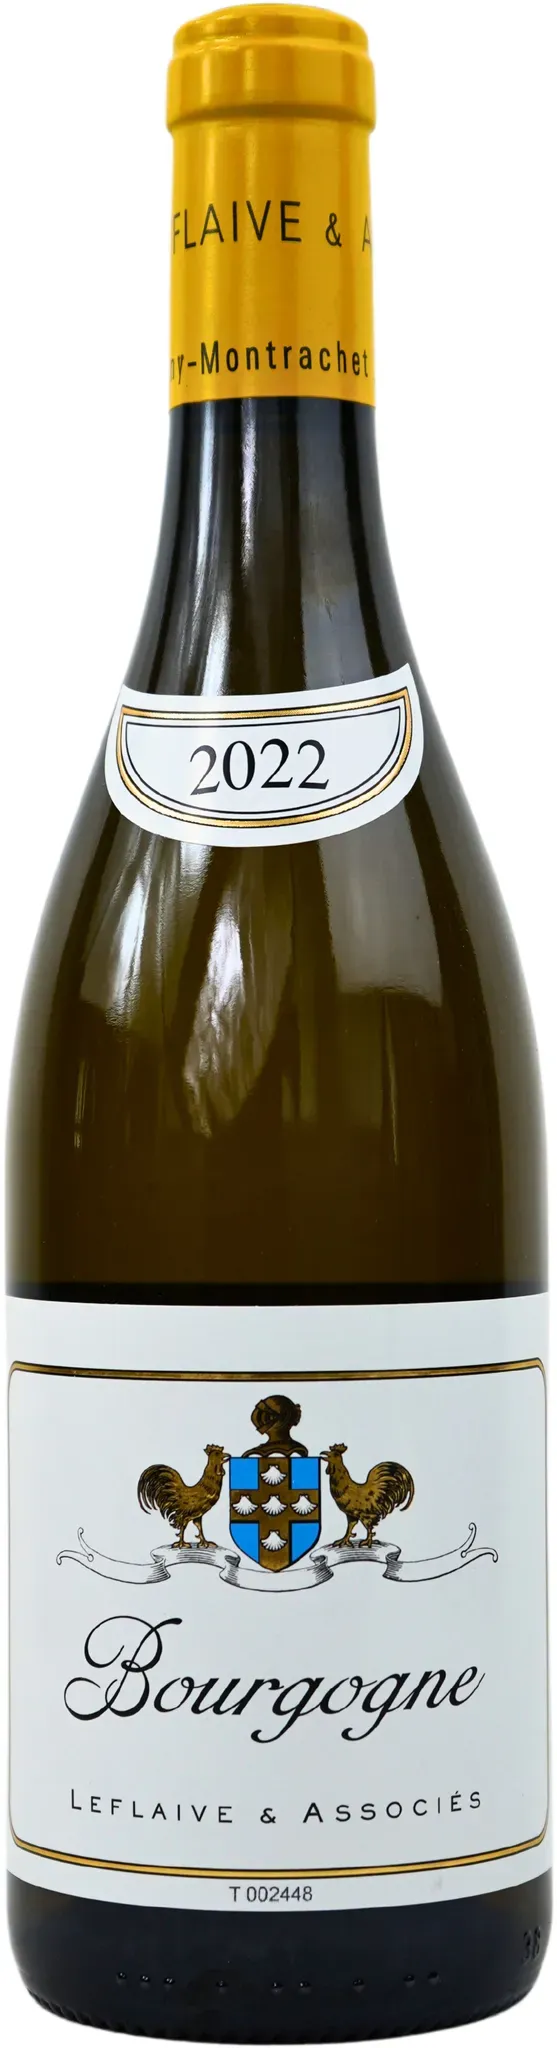 2022 Bourgogne blanc - Leflaive Associes